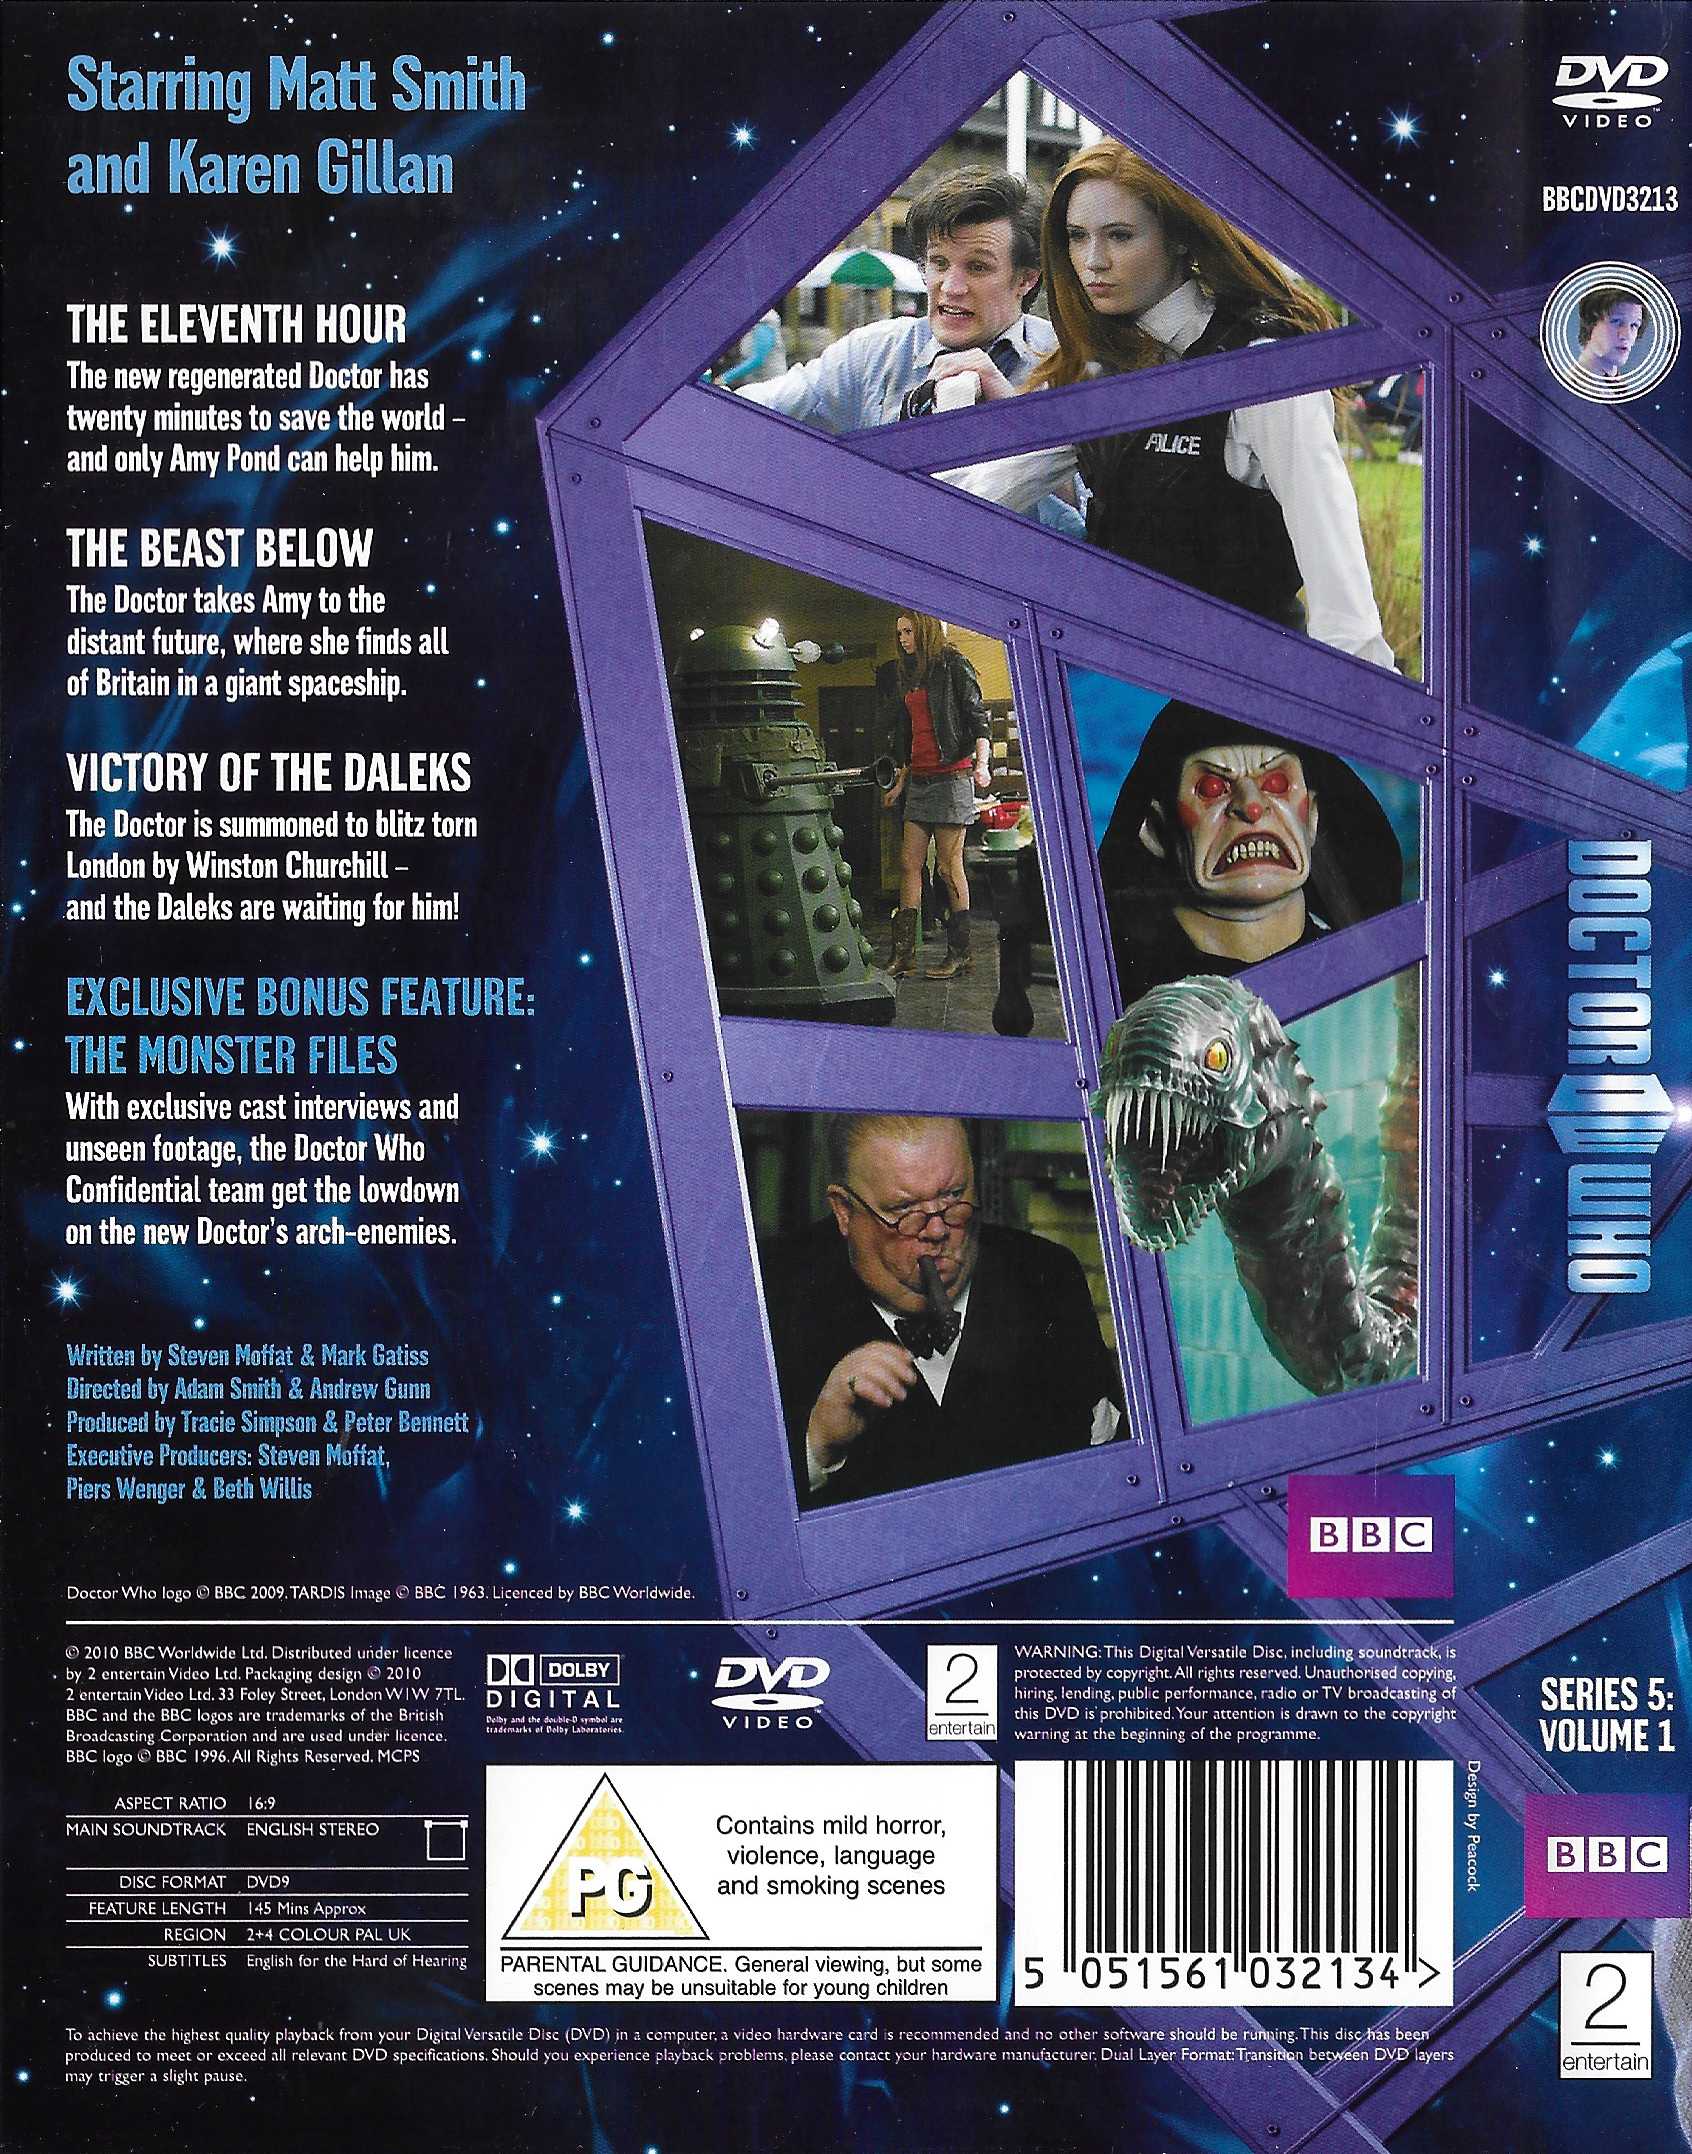 Back cover of BBCDVD 3213